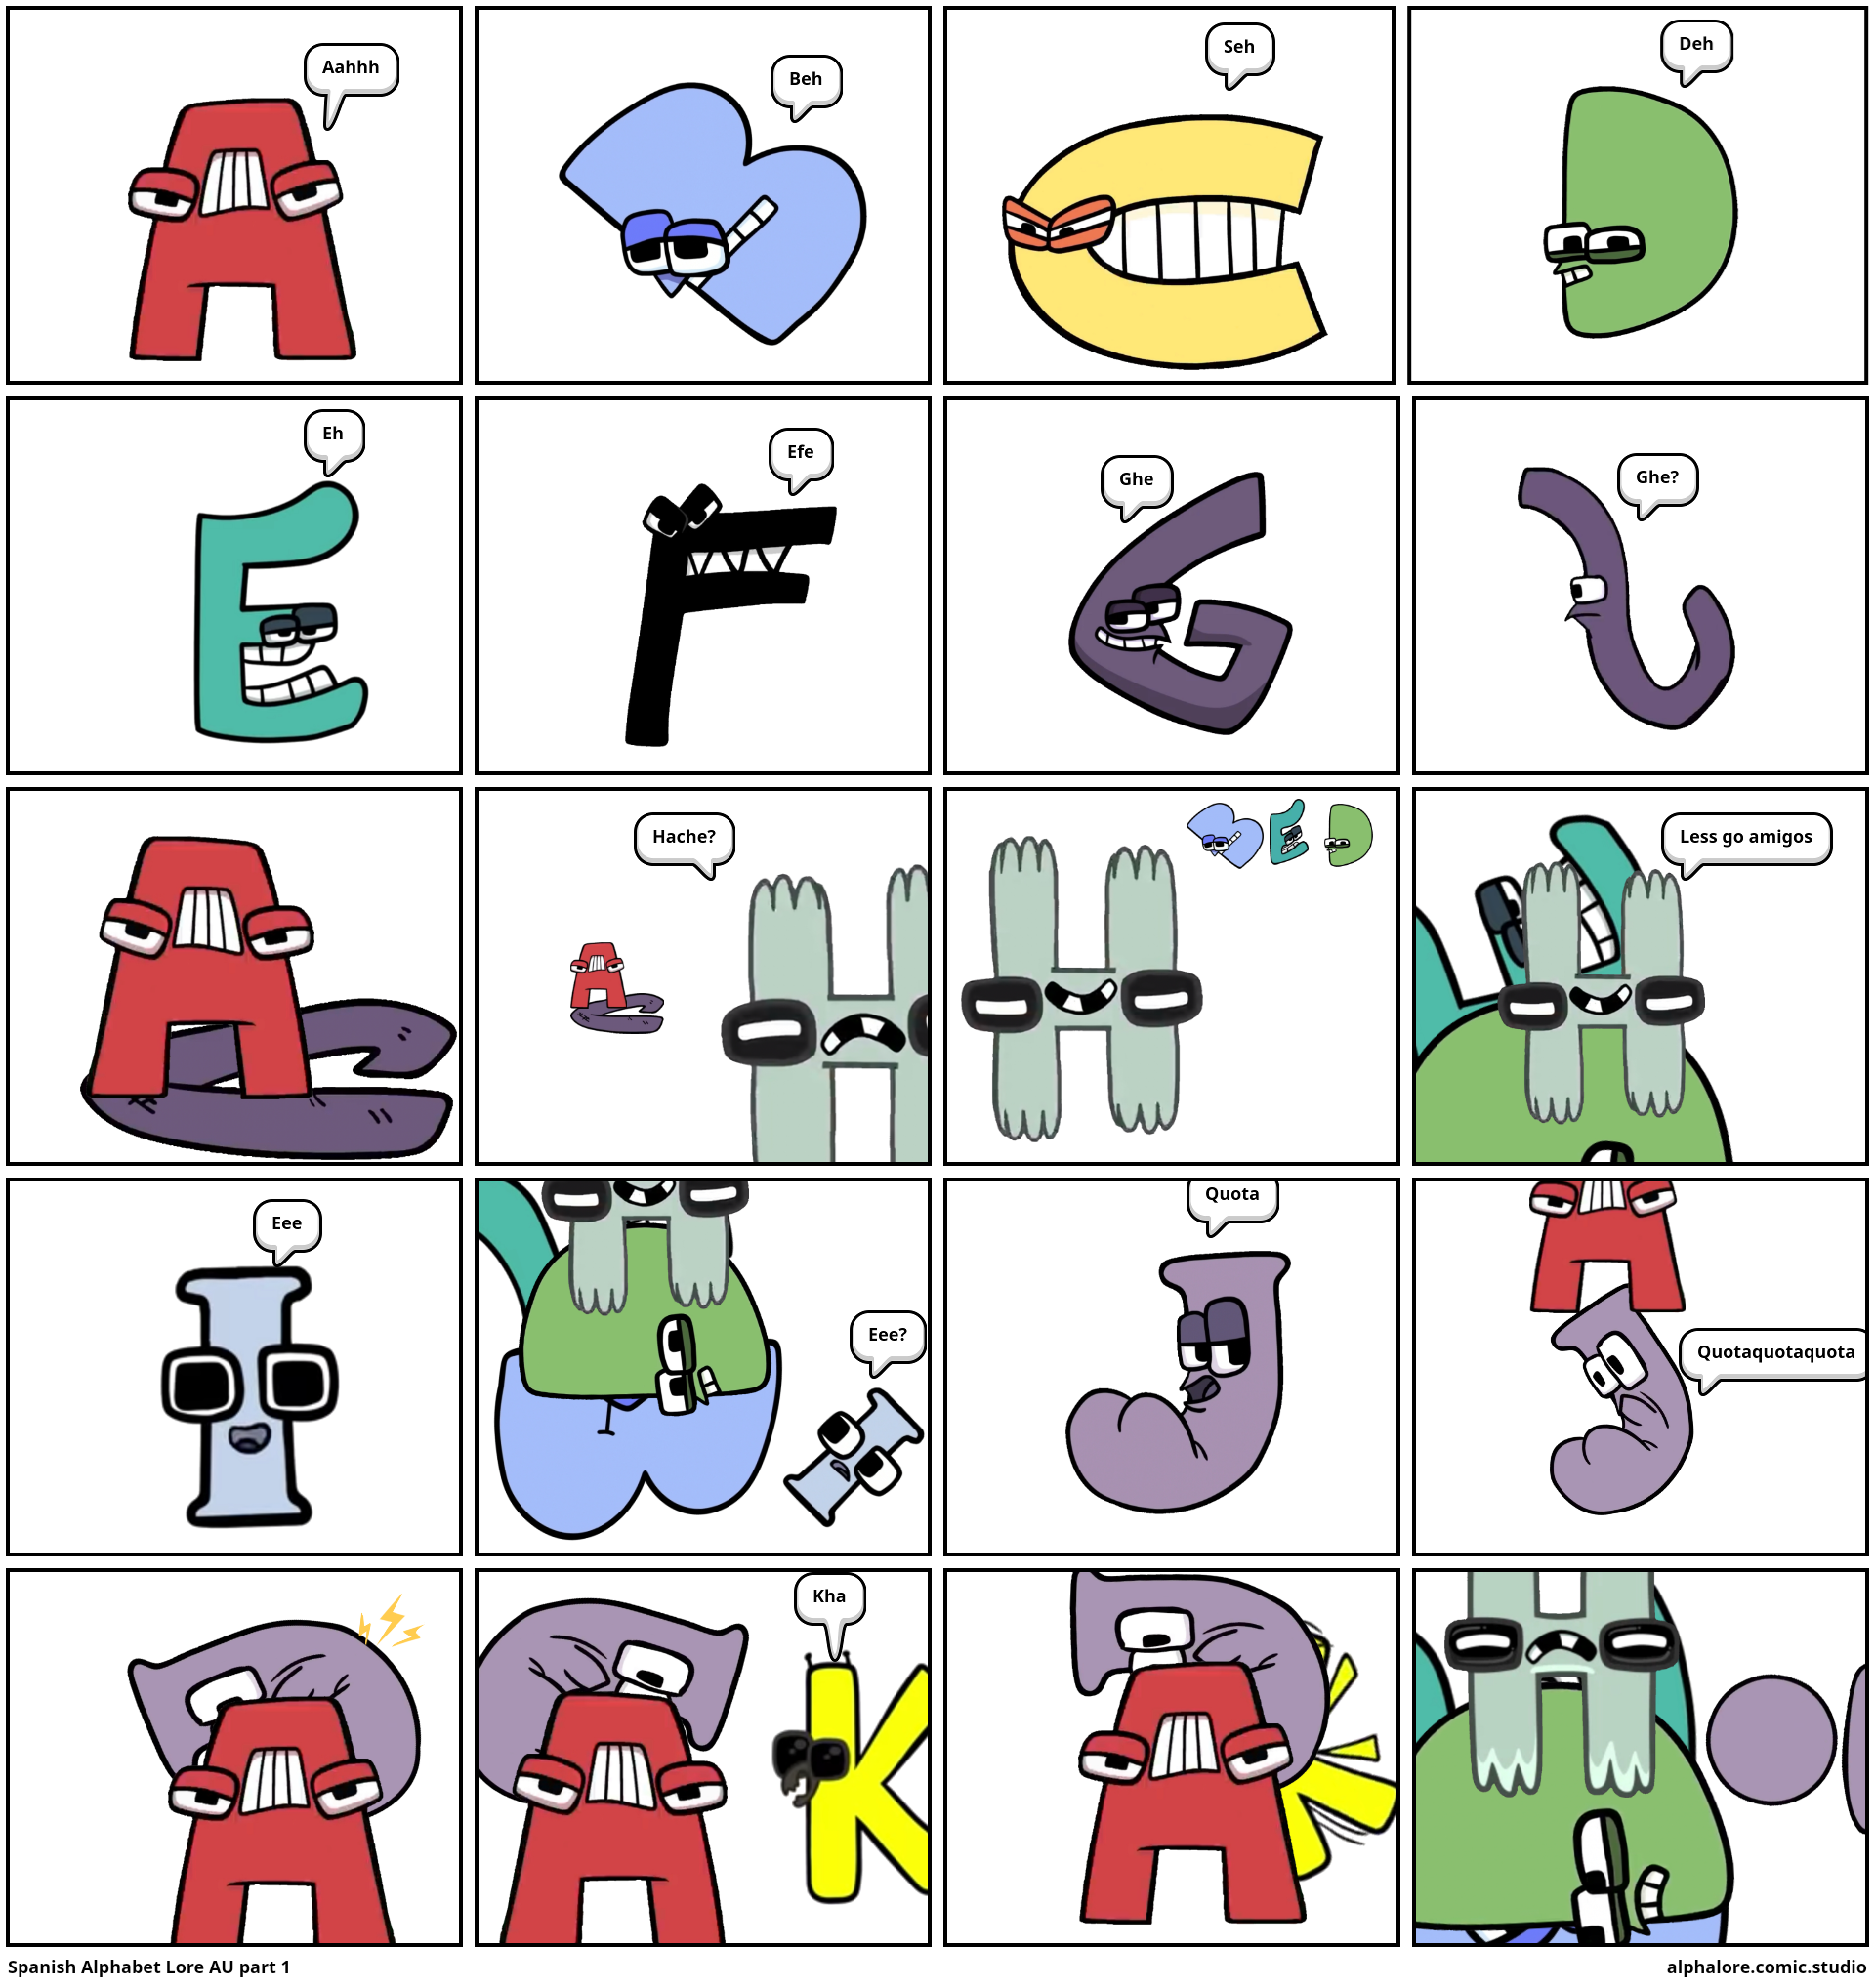 Brazilian Alphabet Lore (N) - Comic Studio